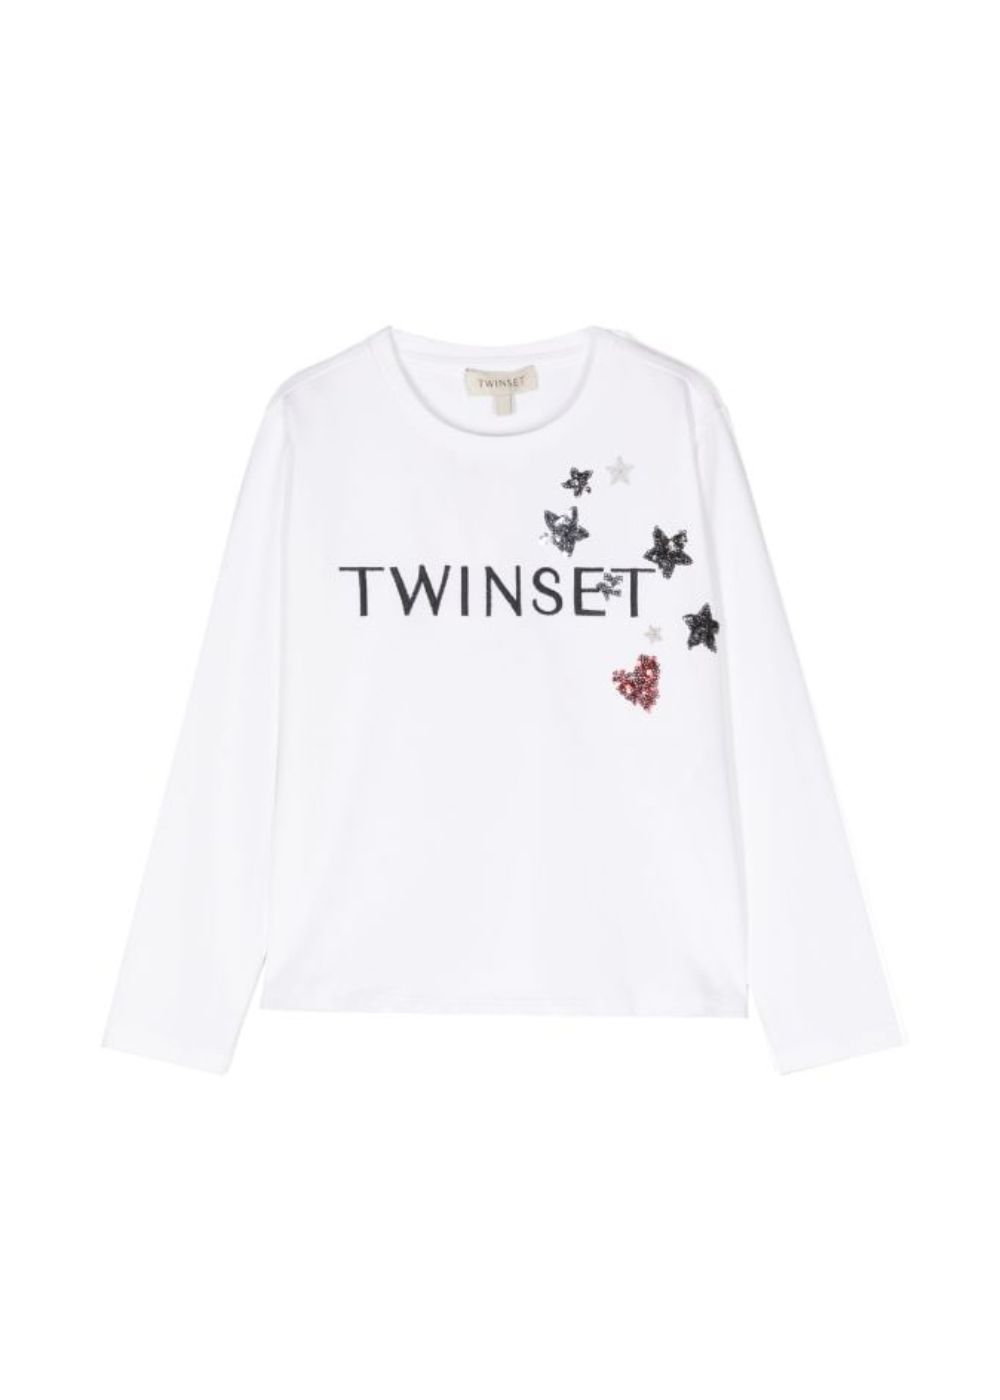 Featured image for “TwinSet T-shirt con Decorazione”